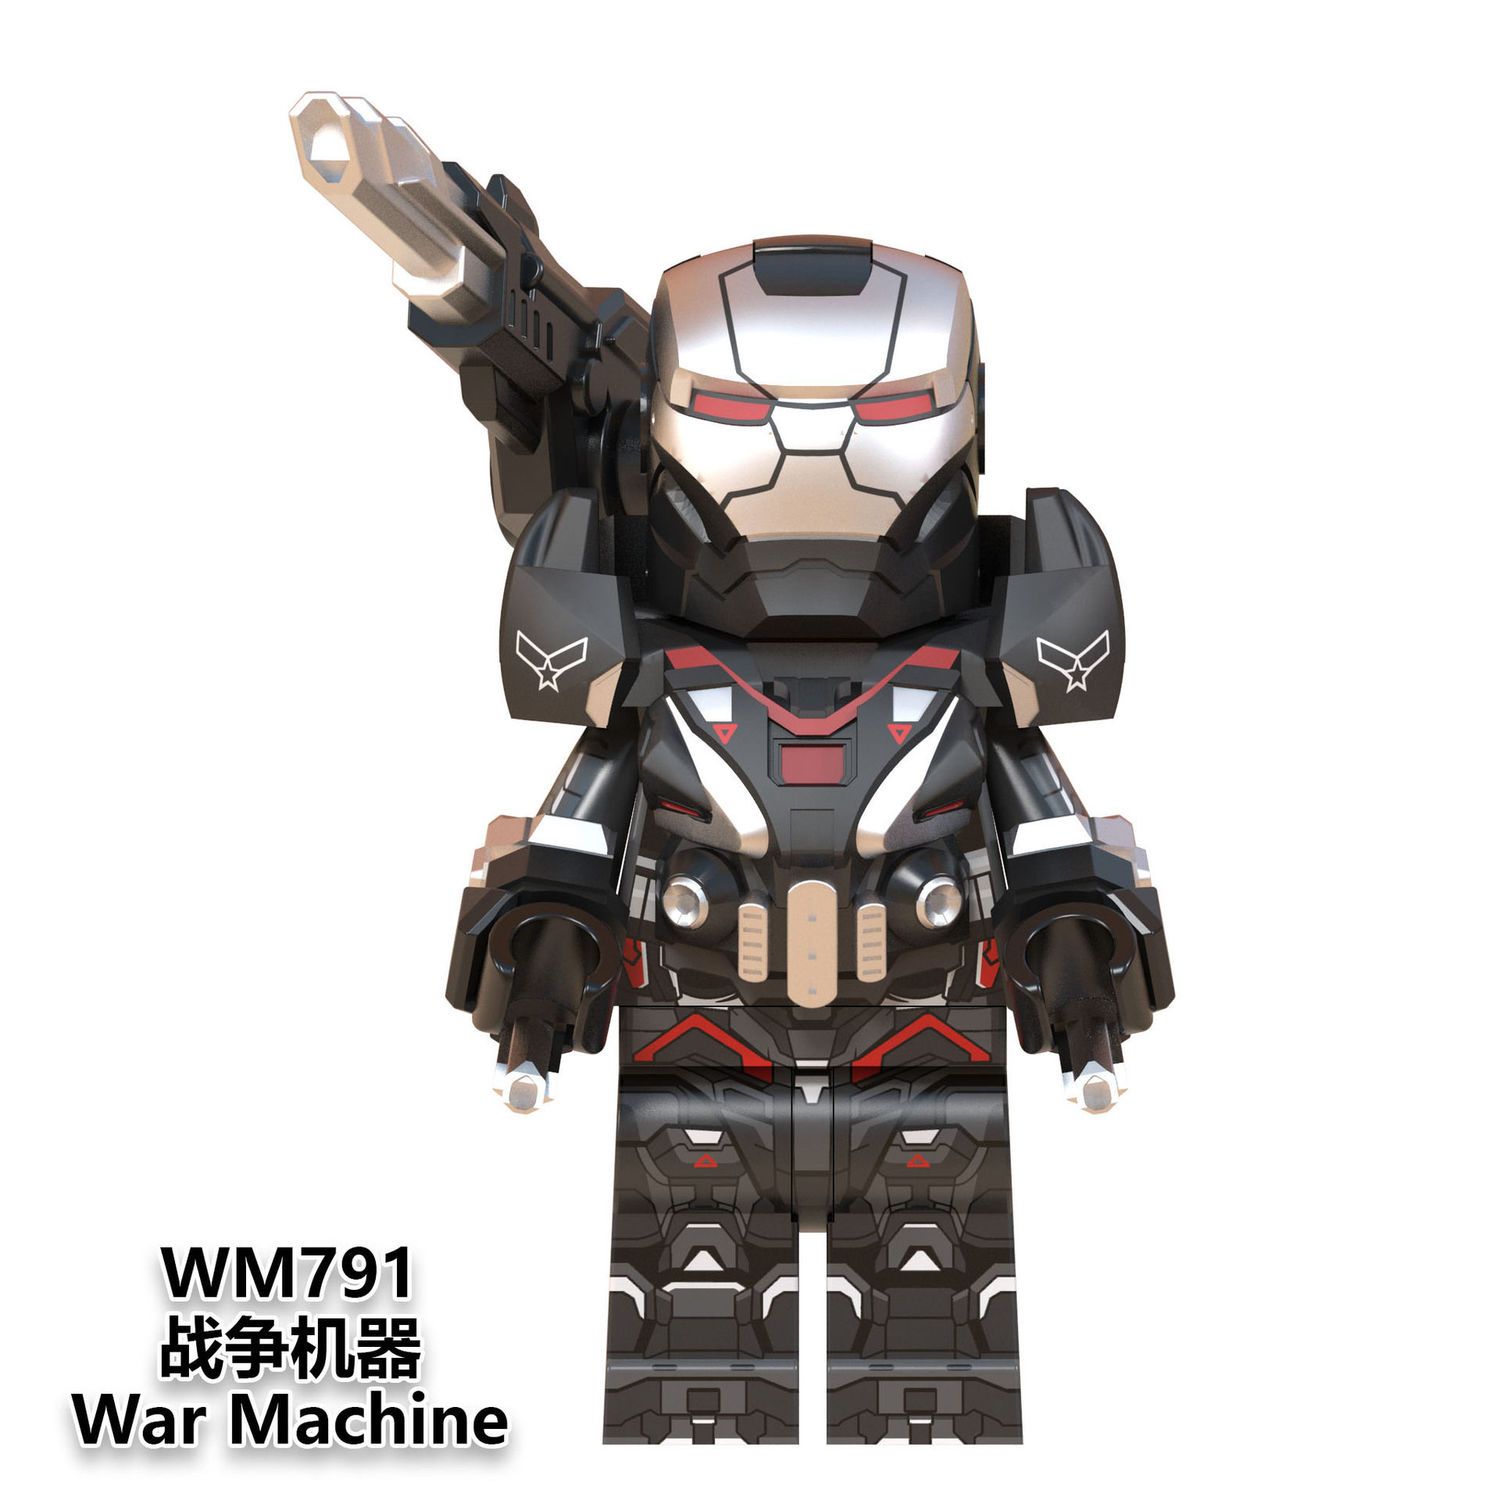 Iron Man war machine Avengers alliance 4 little superhero mieba assembled Lego building block toys